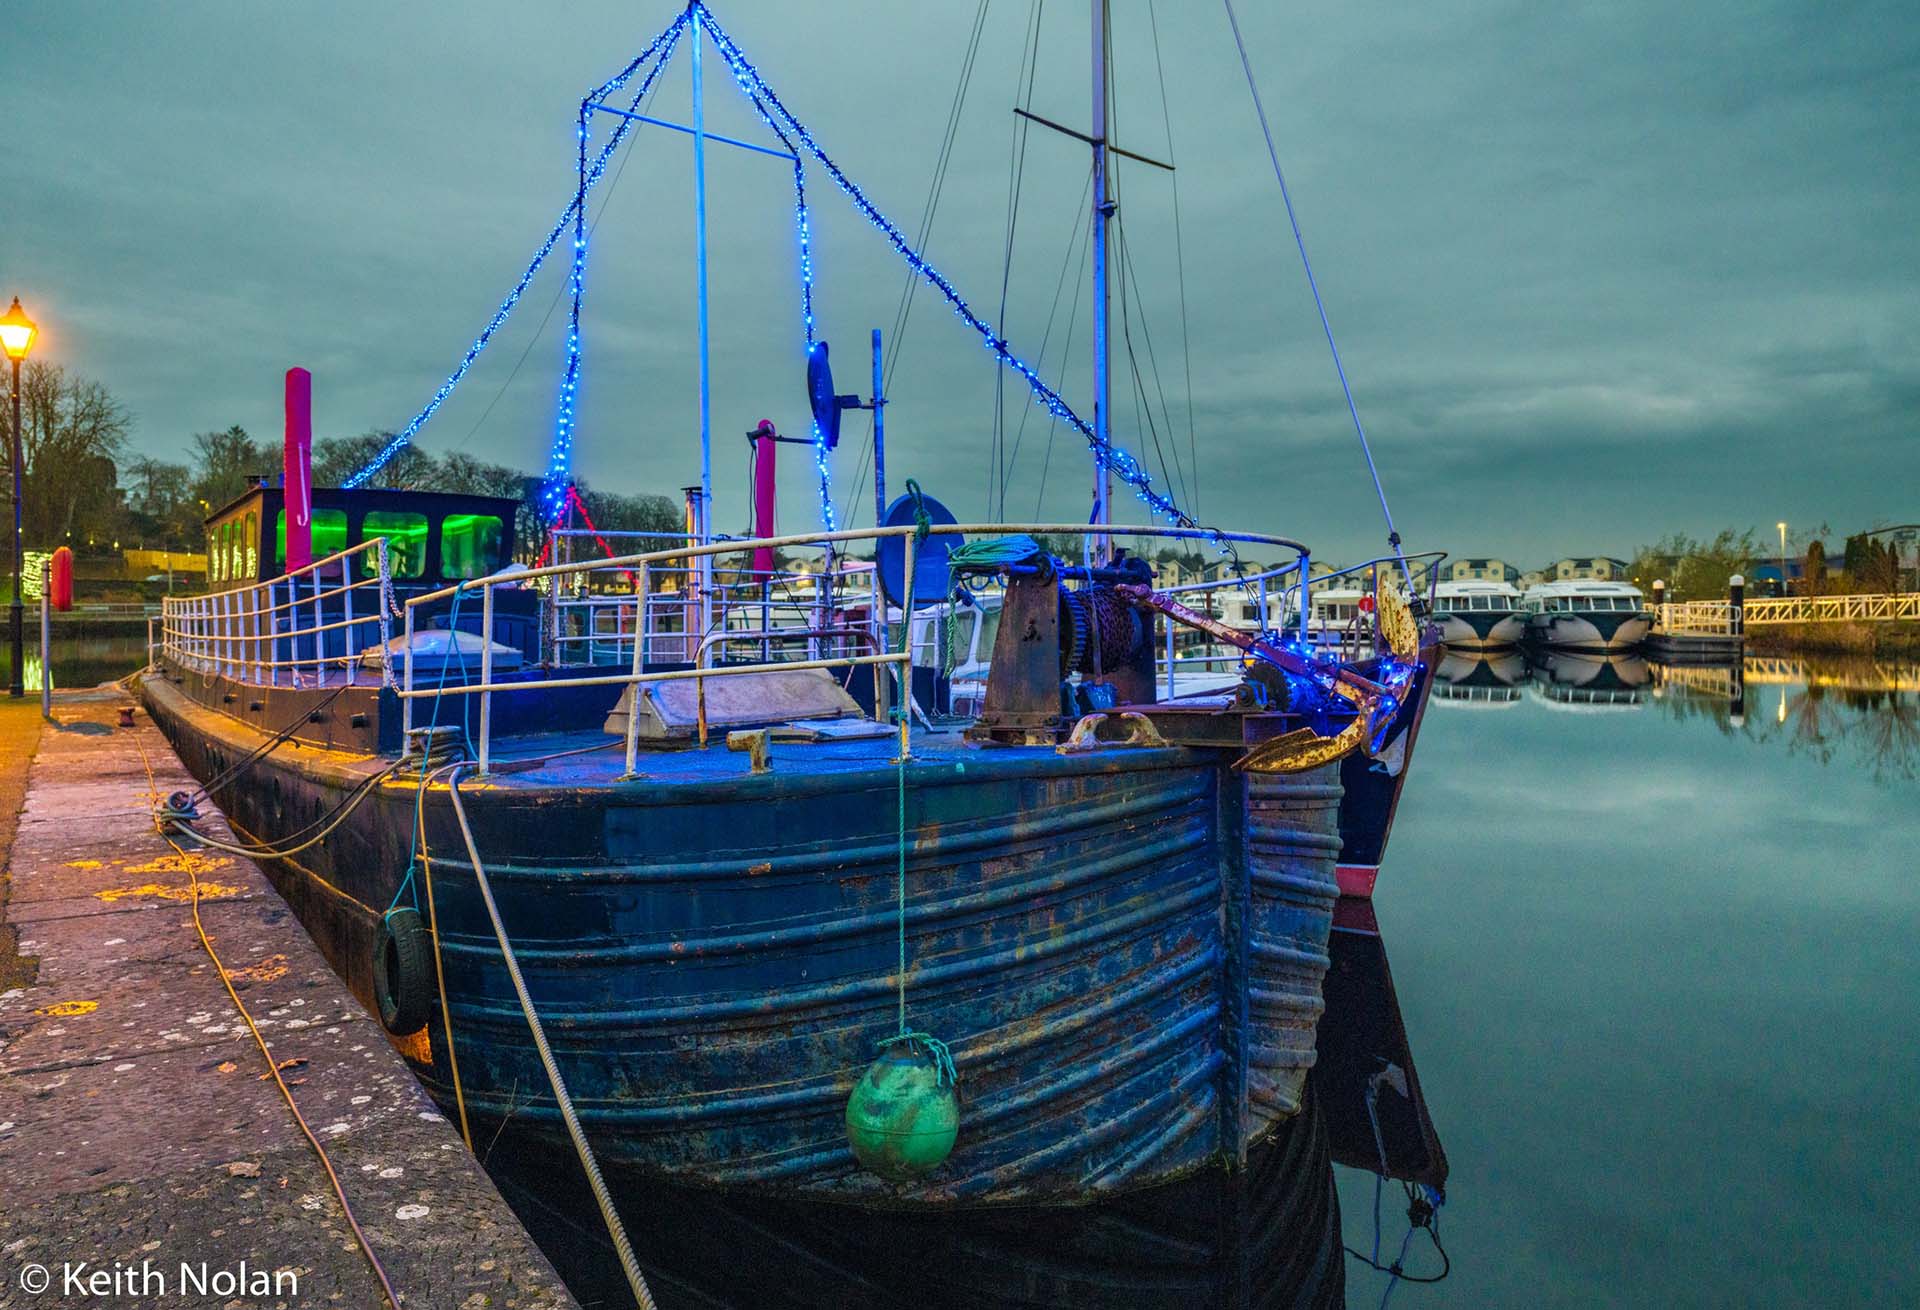 Christmas Boat, Leitrim. Photo by Keith Nolan